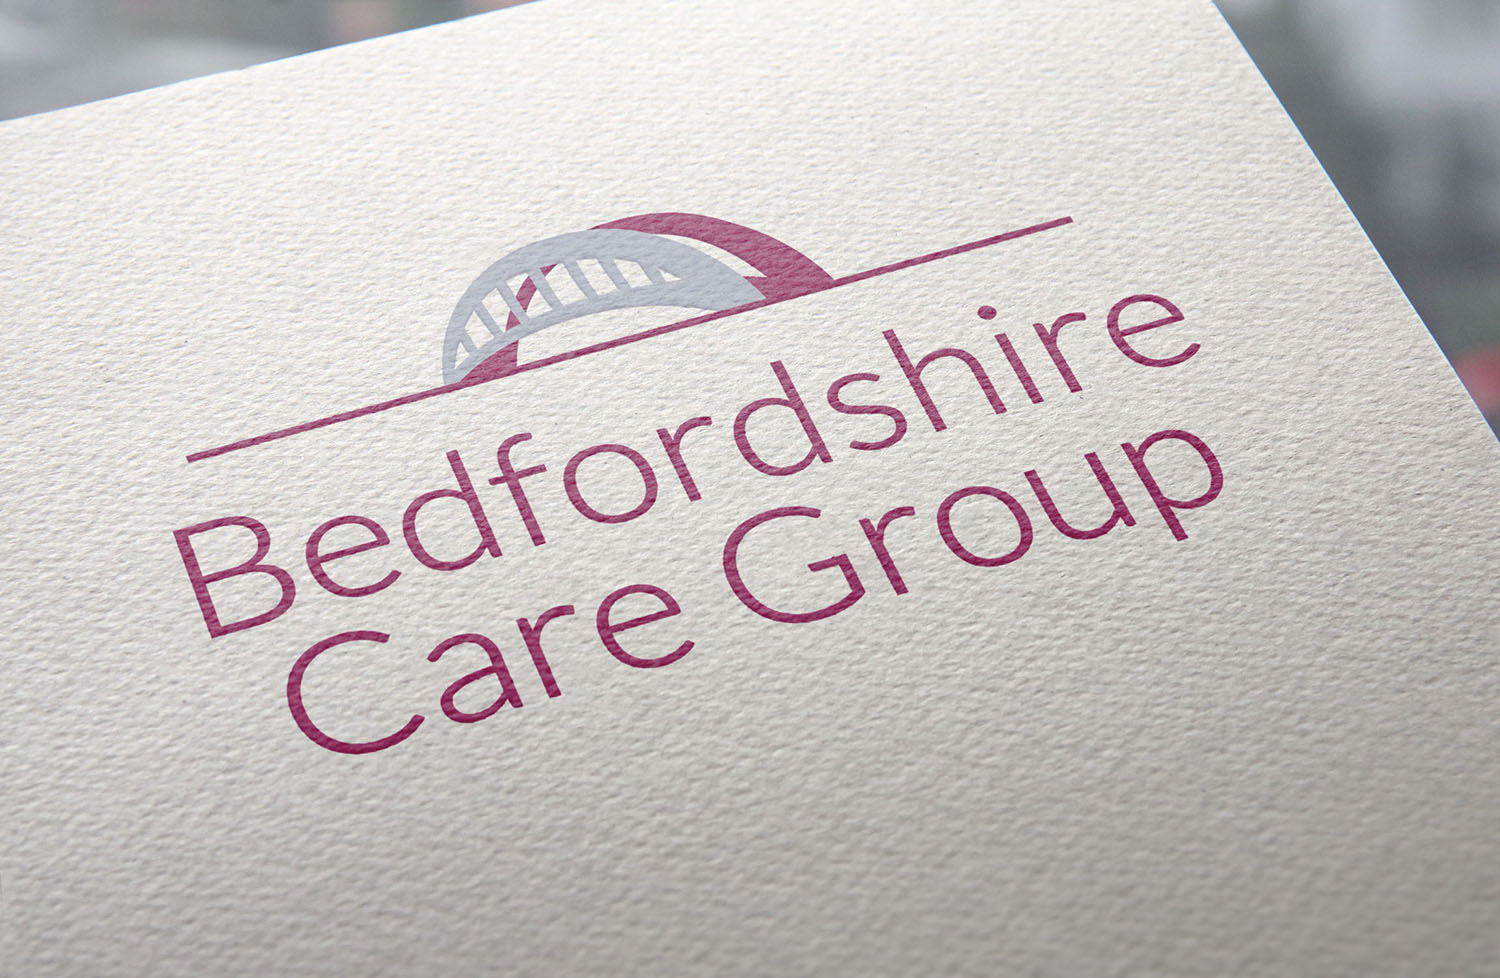 Bedfordshire Care Group logo mockup